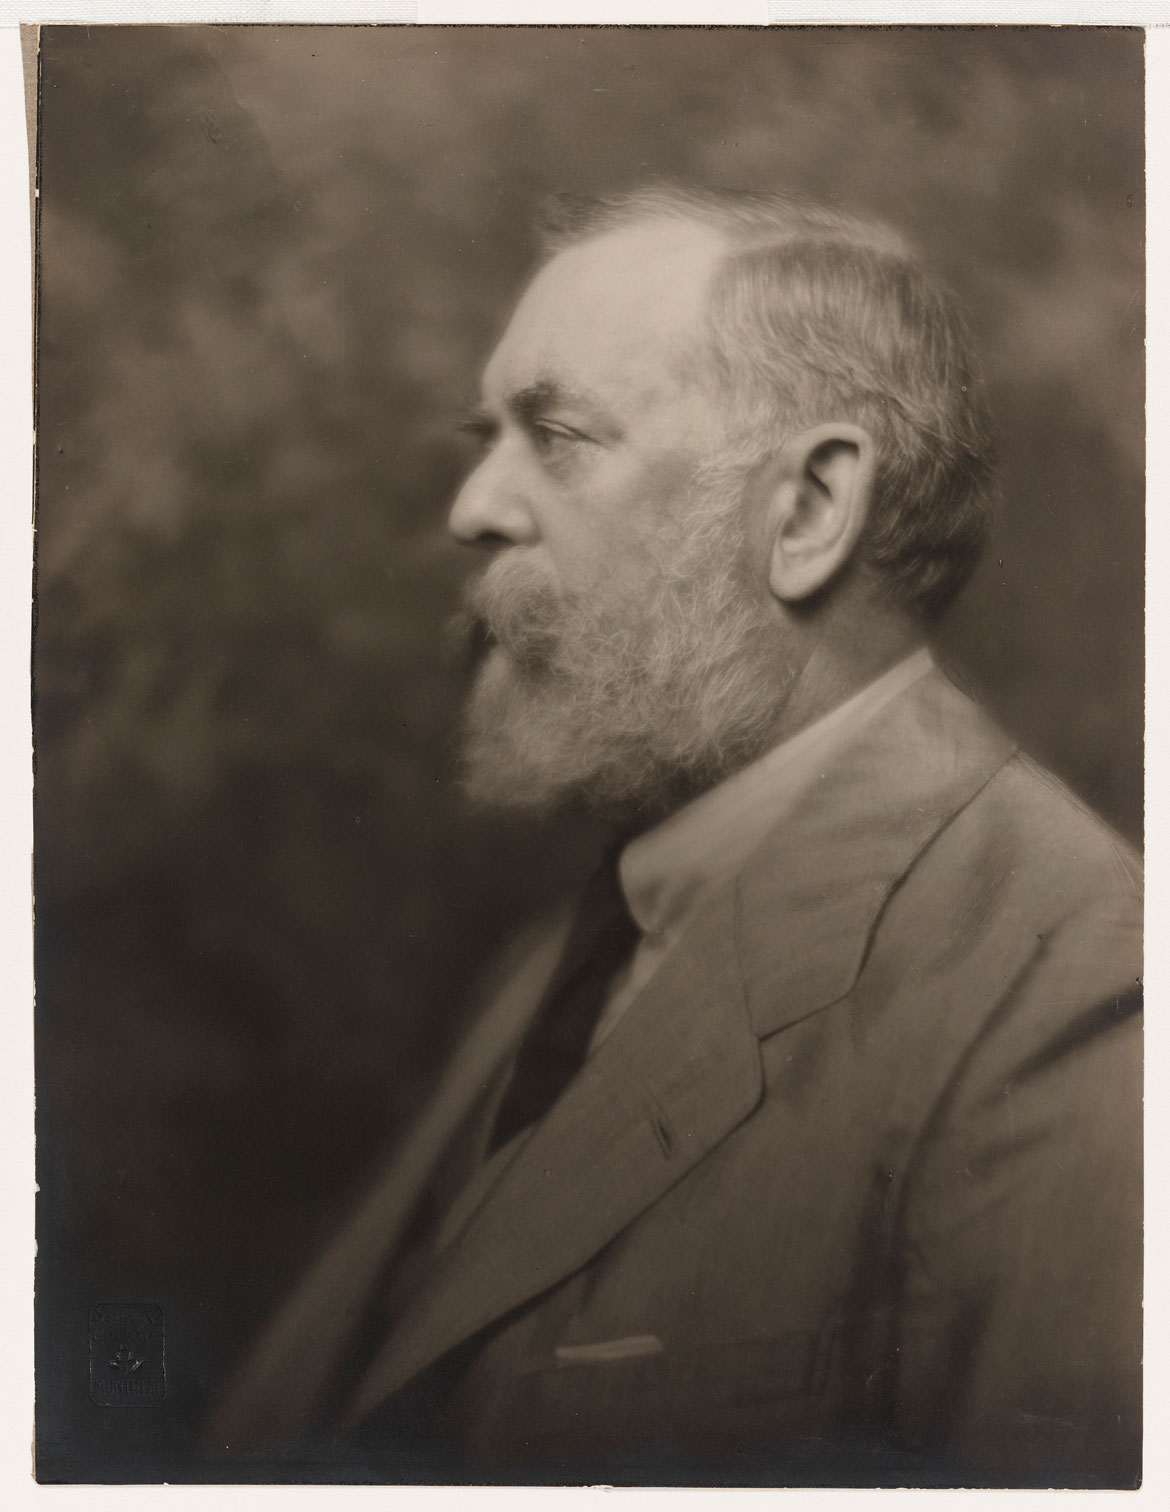 Sidney Robert Carter, "John Singer Sargent," about 1910, photograph, gelatin silver print. (Photograph © Museum of Fine Arts, Boston)